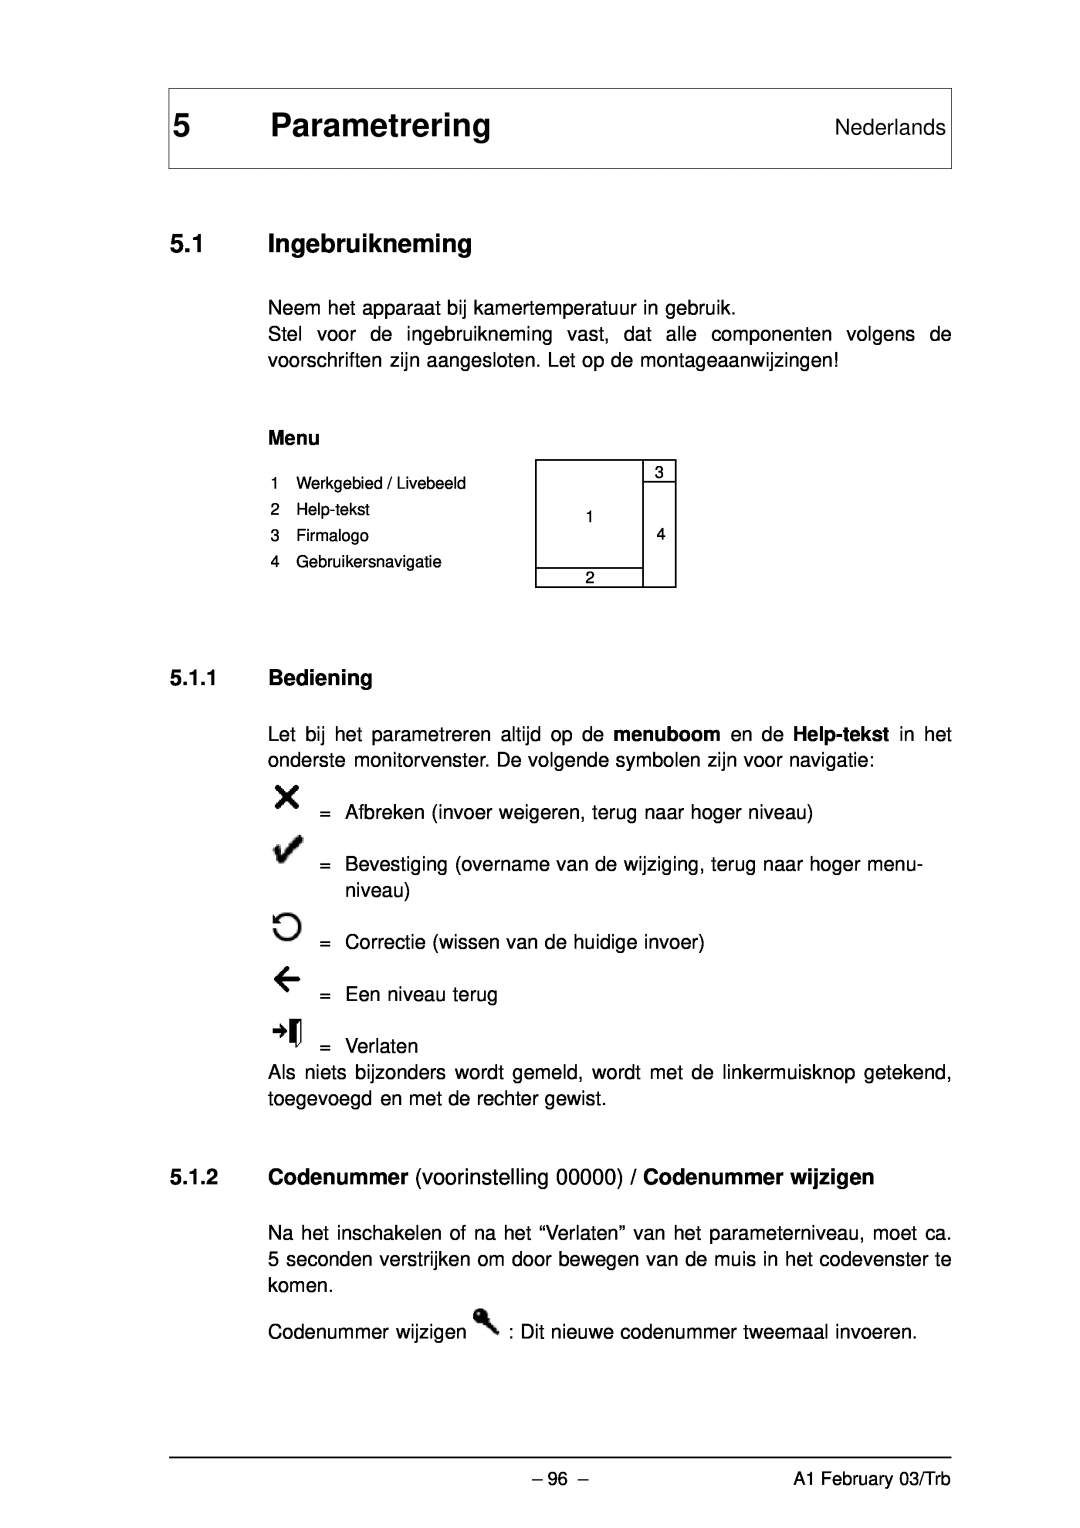 Bosch Appliances VMD01 M60 NTSC, VMD01 M50 PAL manual Parametrering, 5.1Ingebruikneming, Nederlands, Menu 